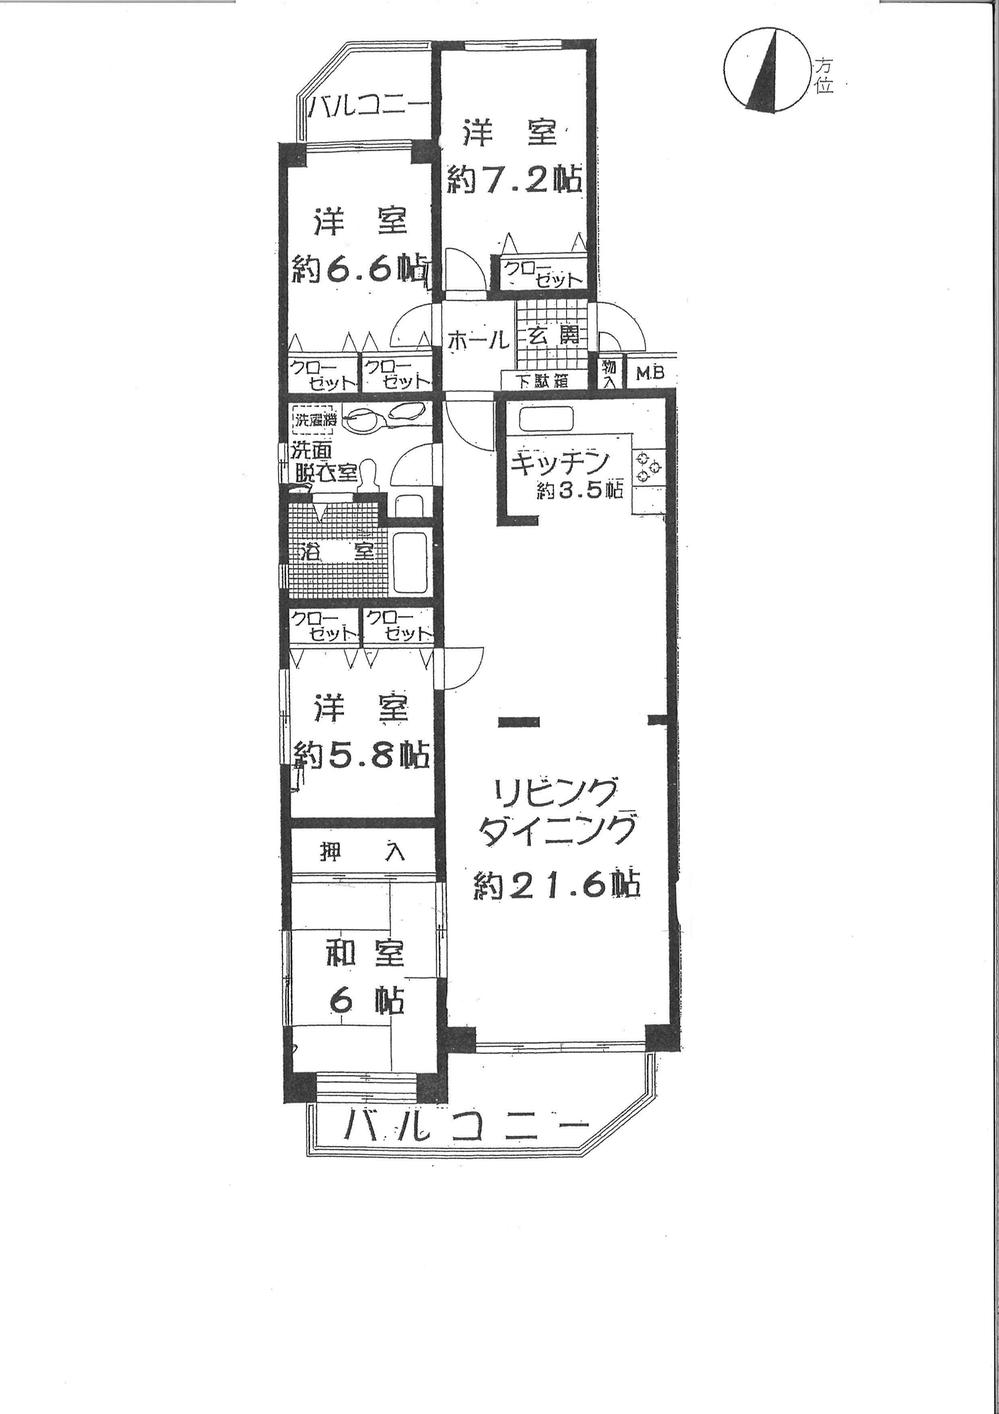 Floor plan. 4LDK, Price 44,800,000 yen, Footprint 115.25 sq m , Balcony area 14.04 sq m